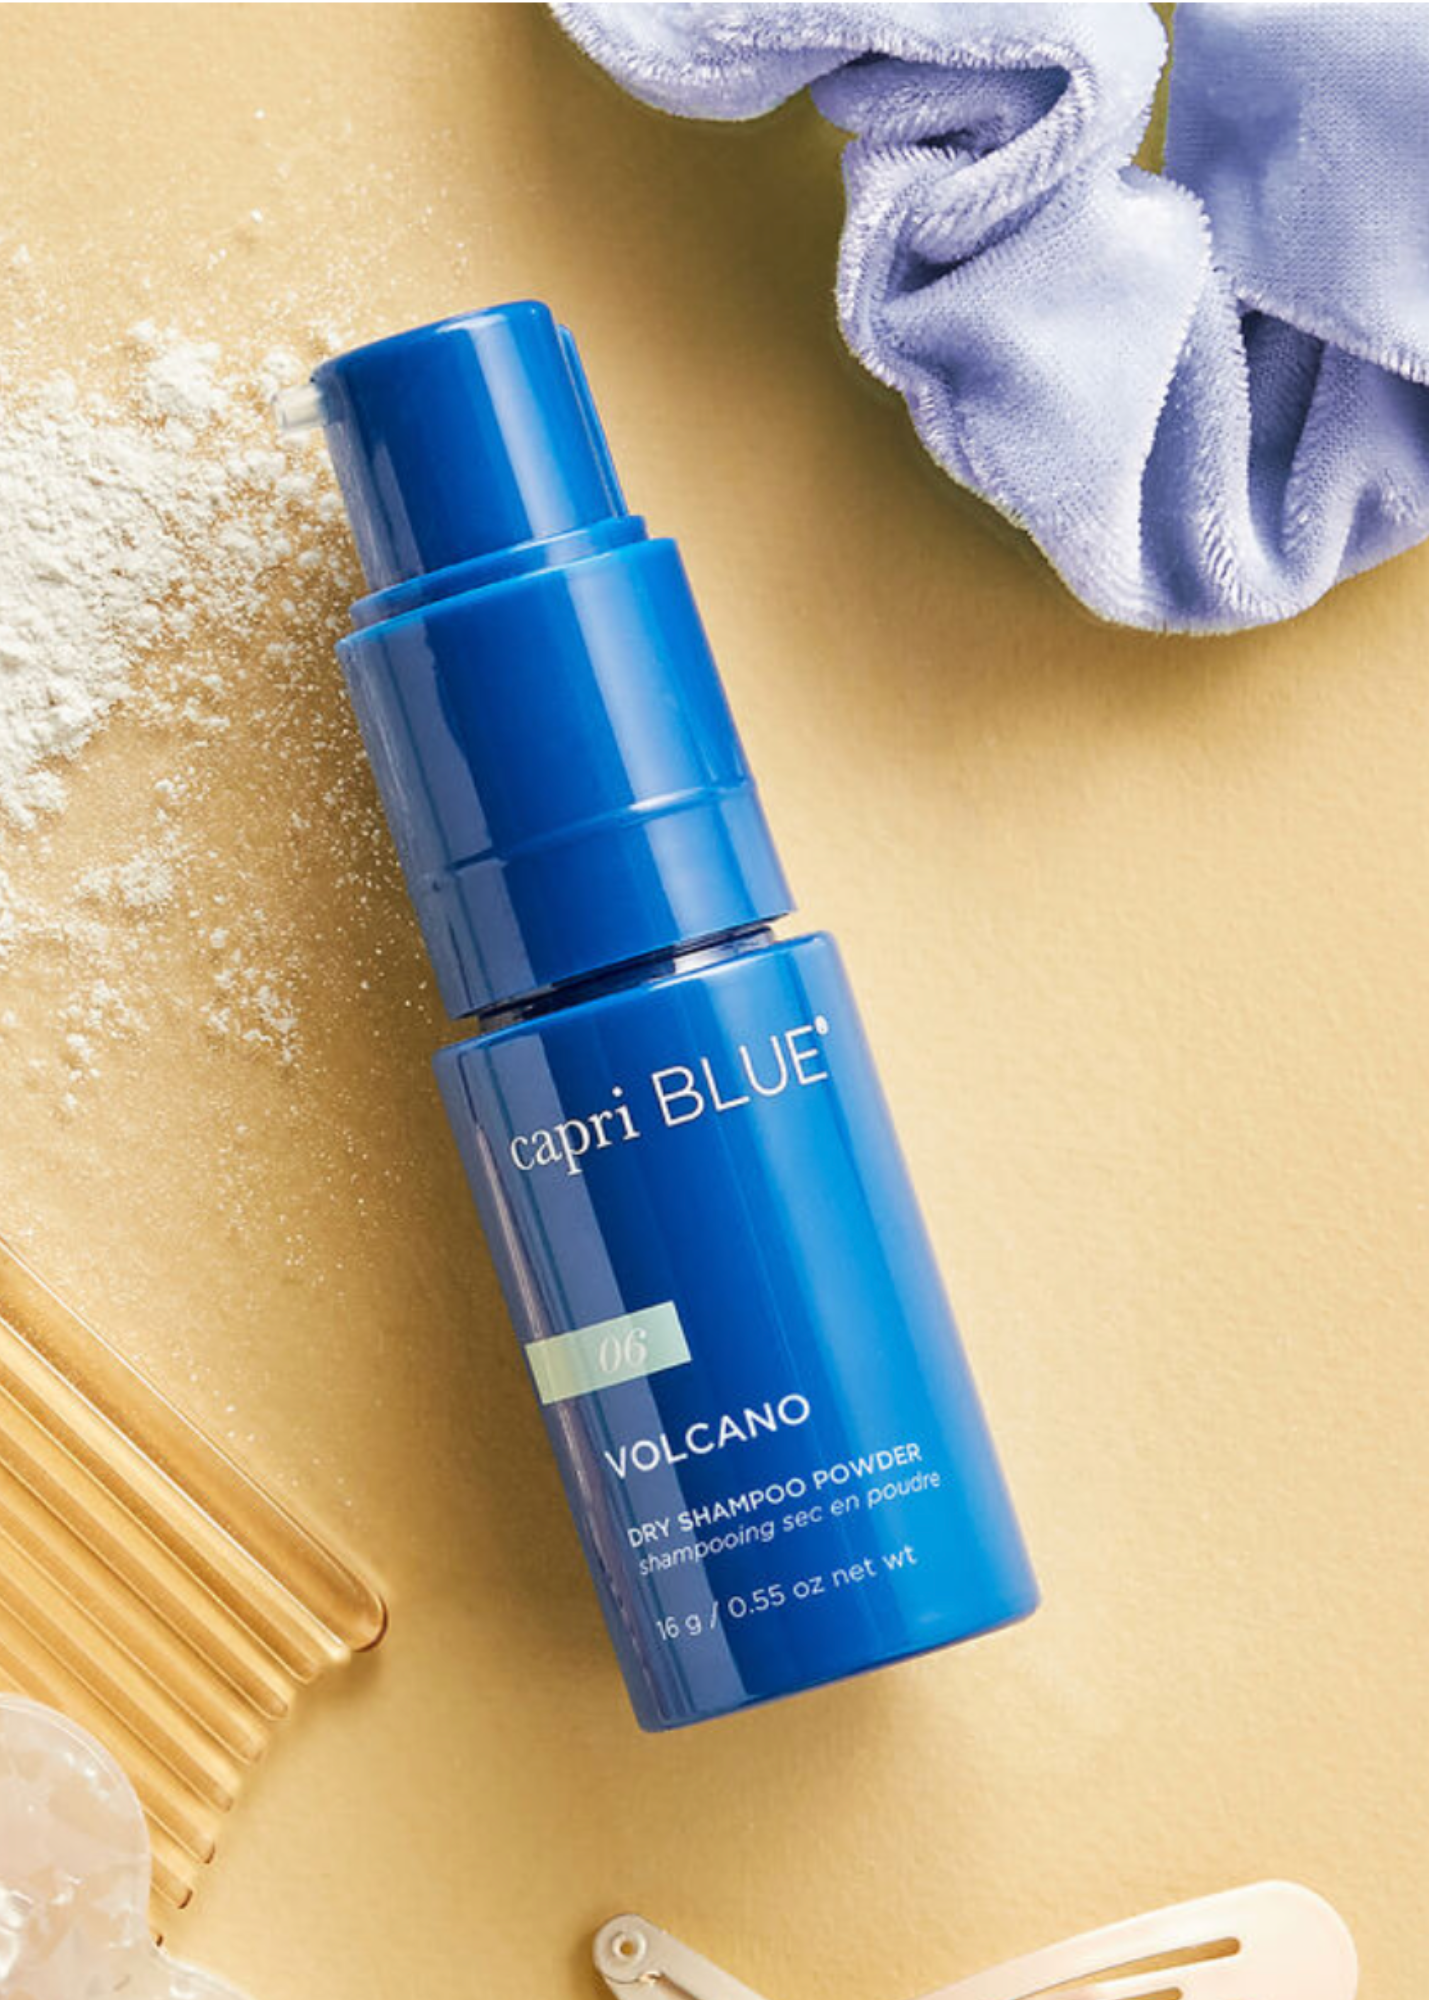 Capri Blue® Dry Shampoo Gifts